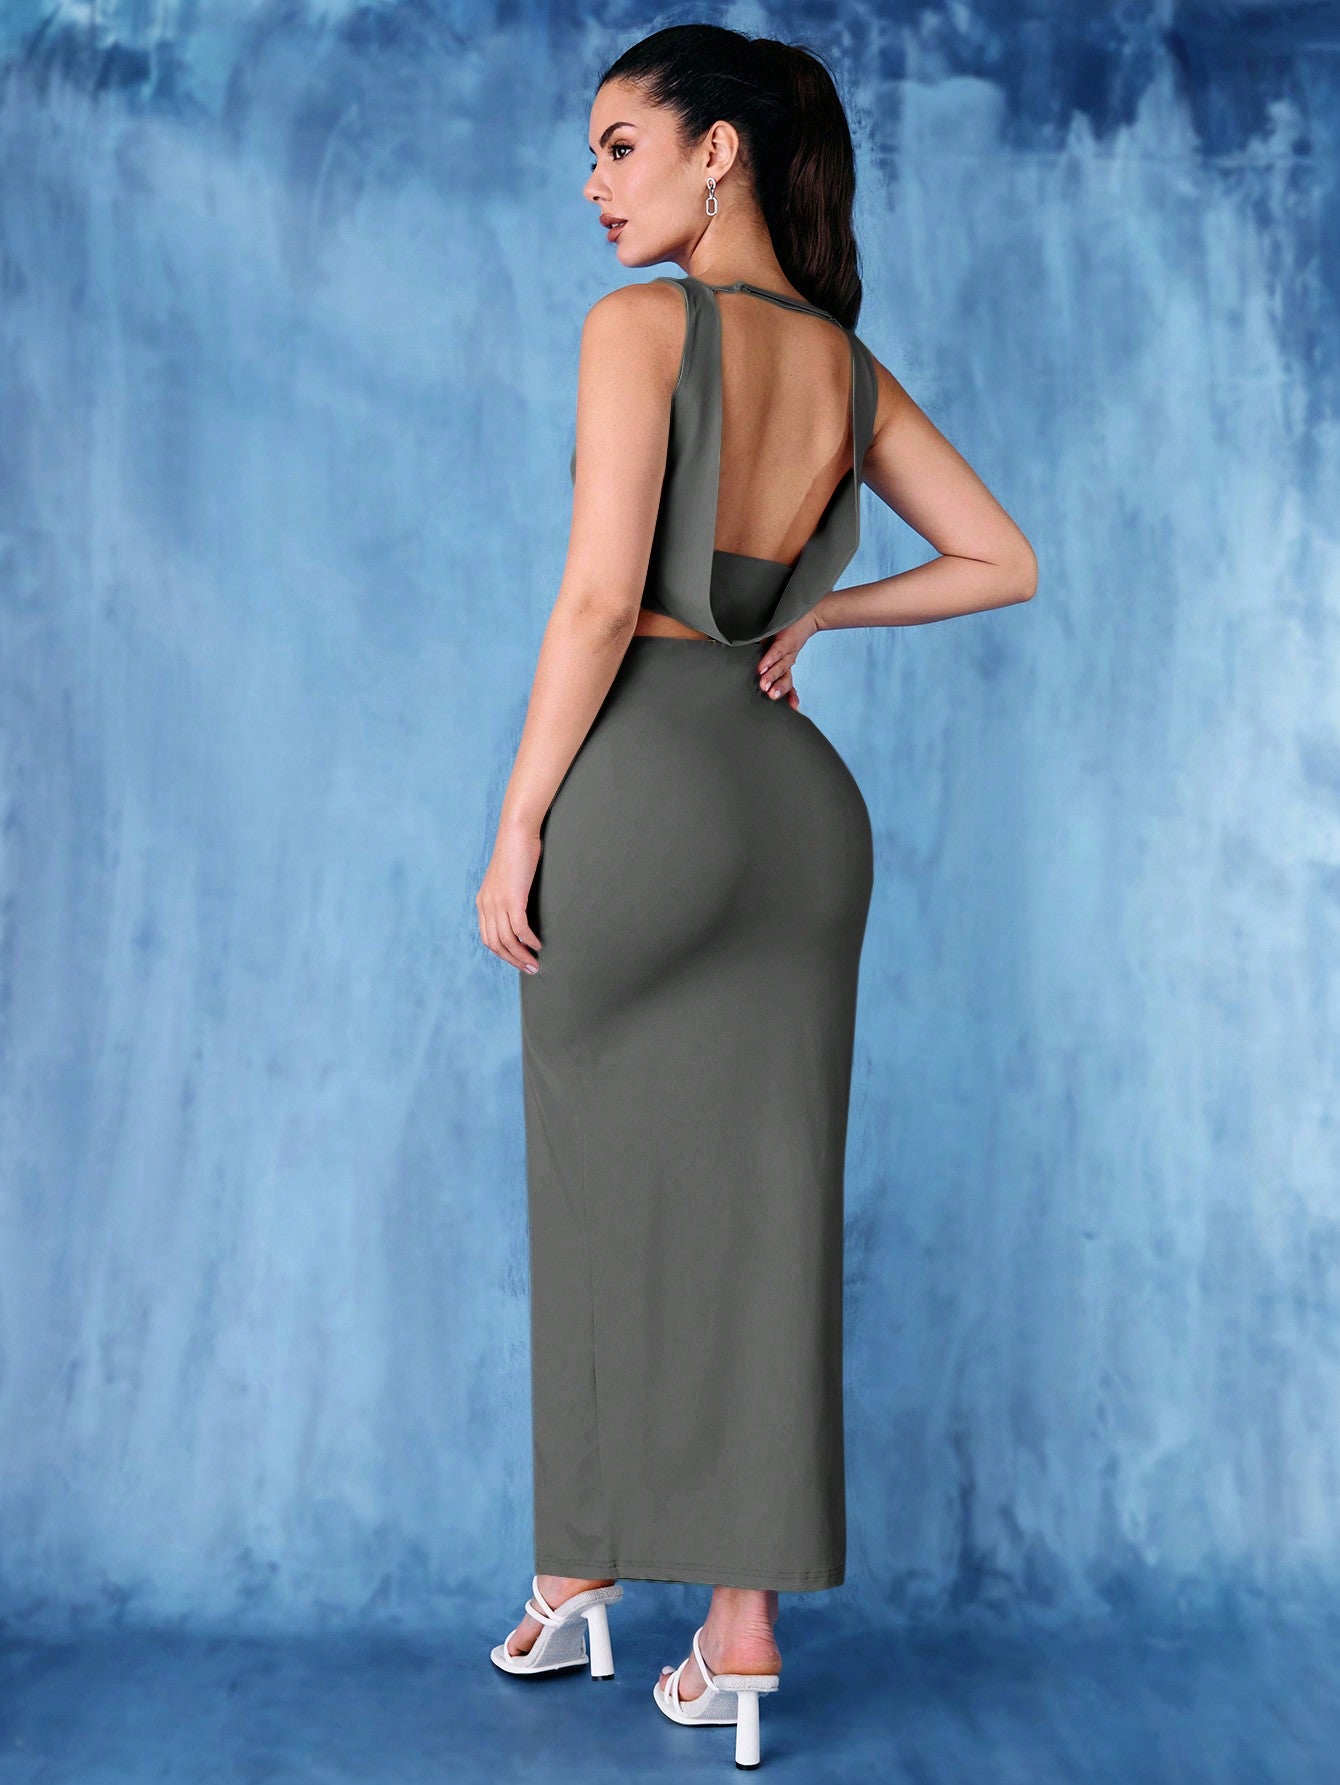 Women's Hollow Back Sleeveless Crop Top And Slit Midi Skirt Set